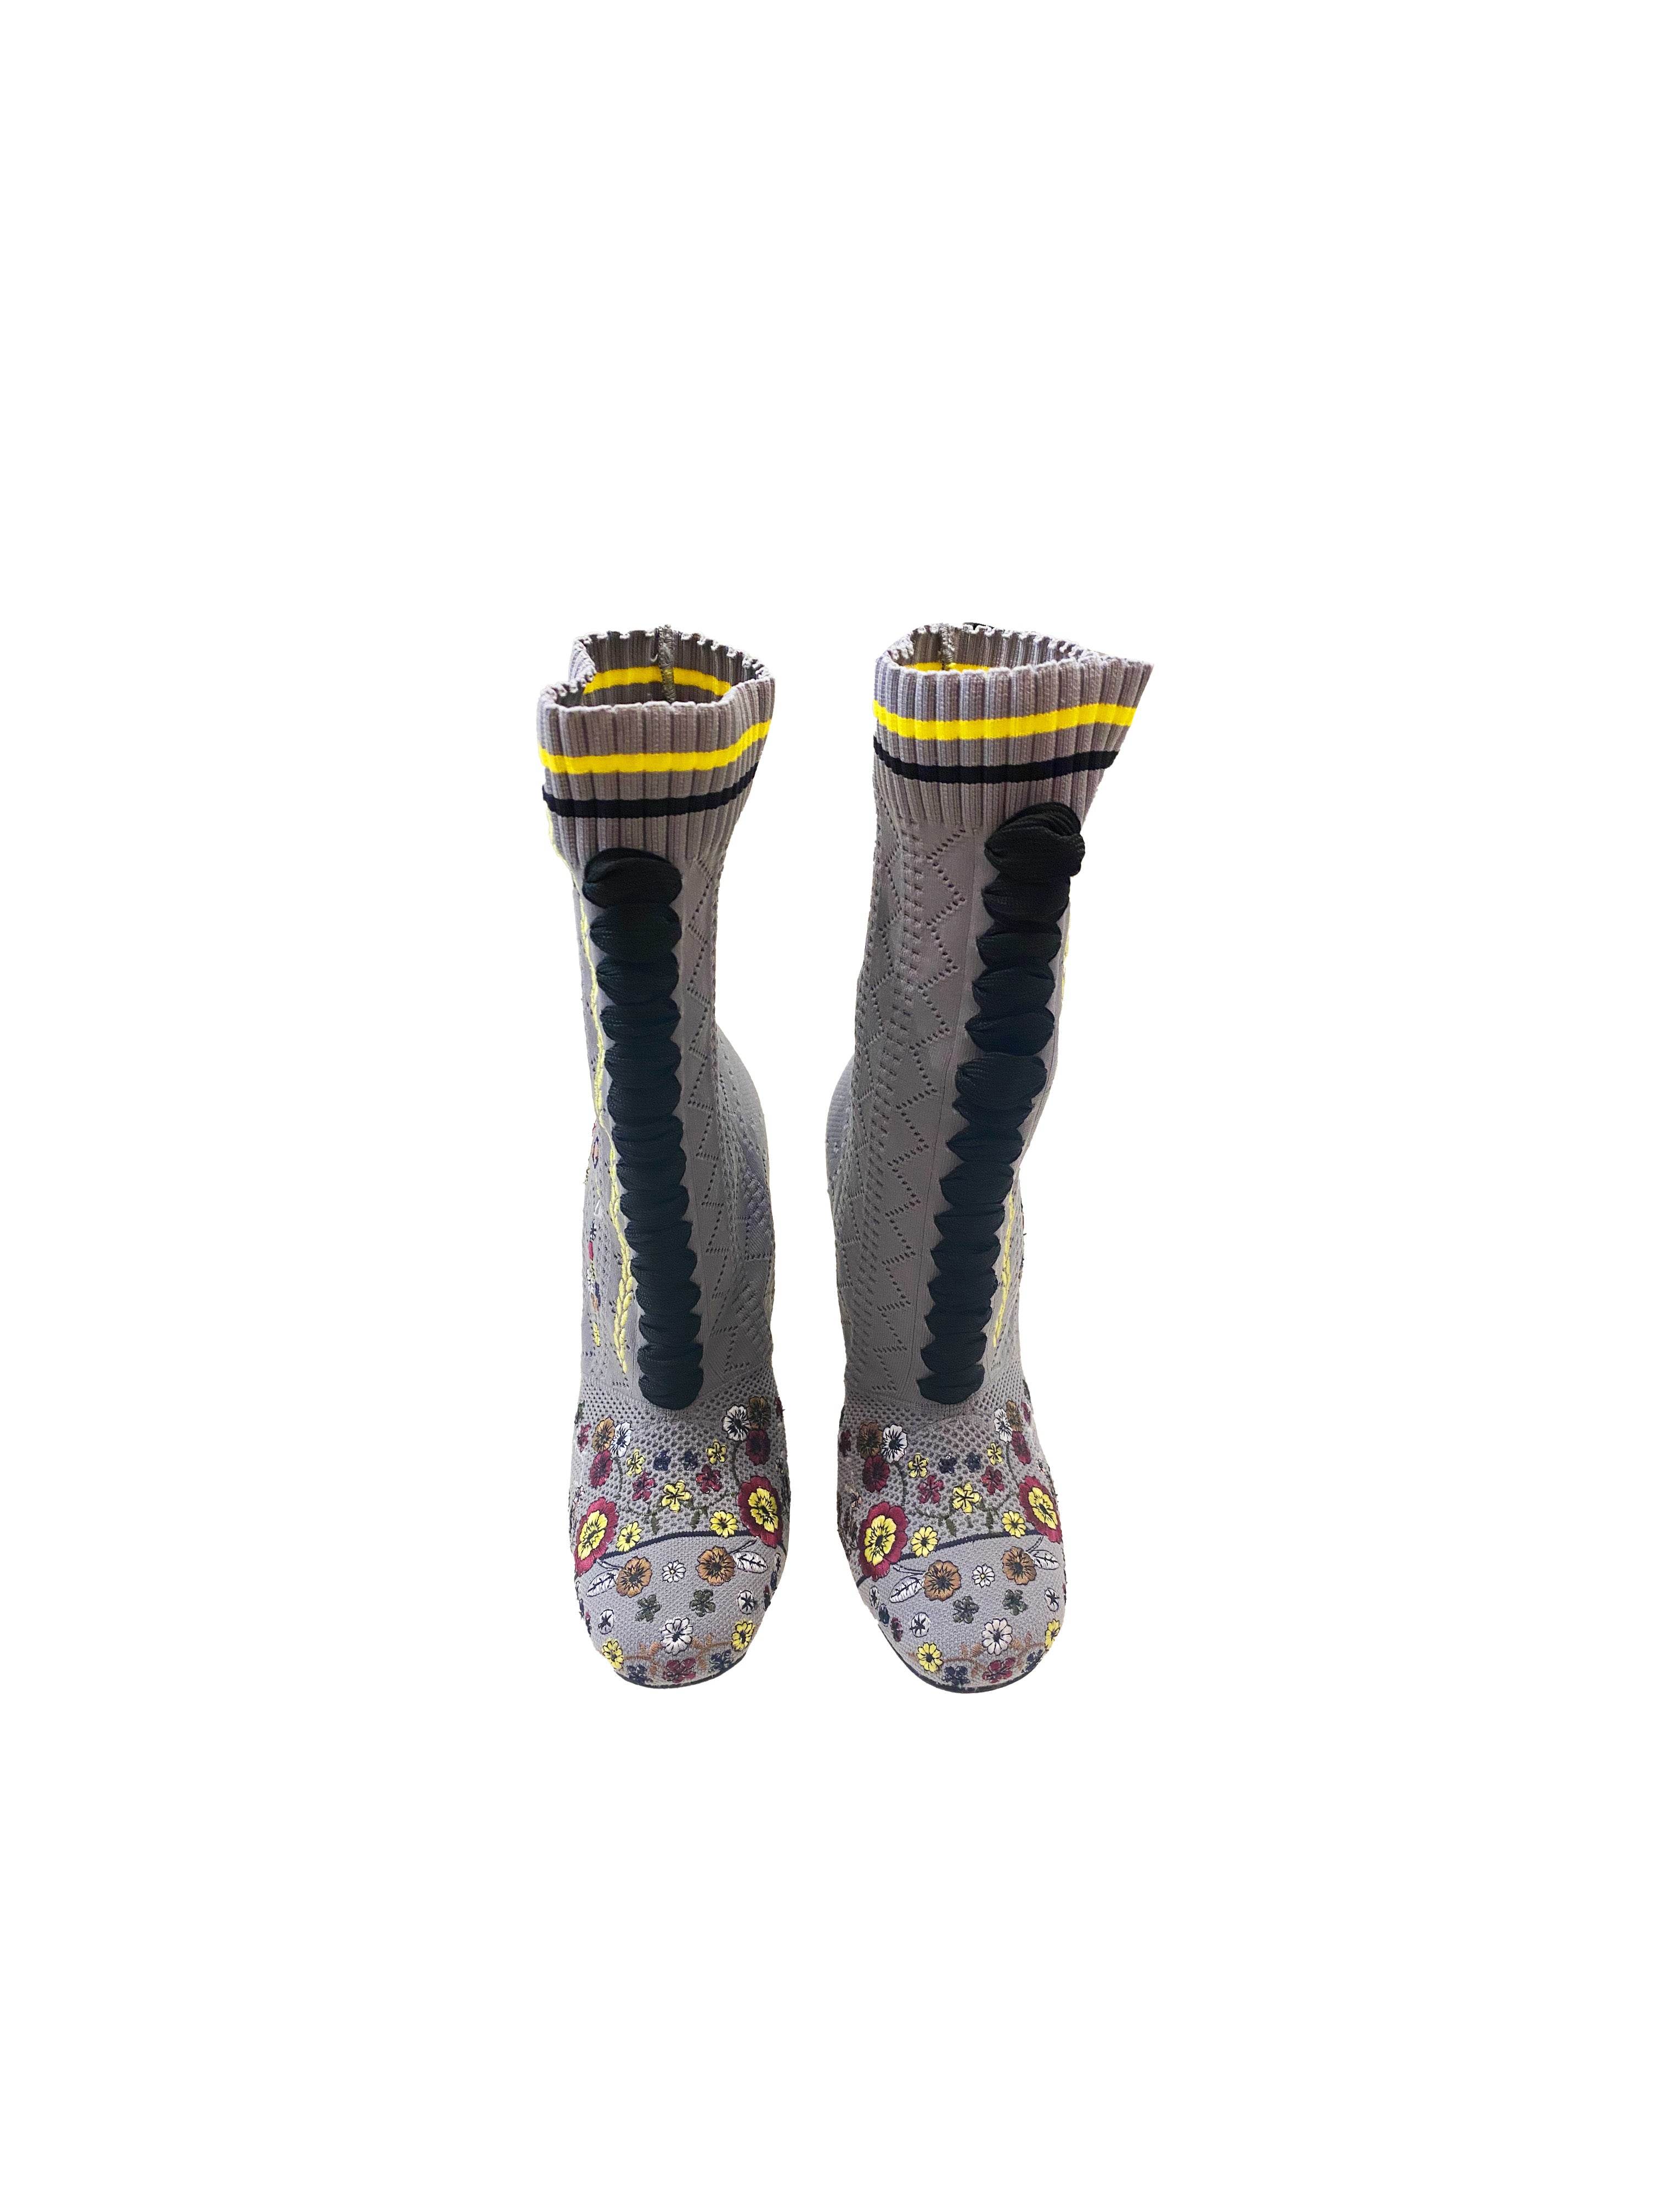 Fendi Fall 2016 Crochet Floral Sock Boots